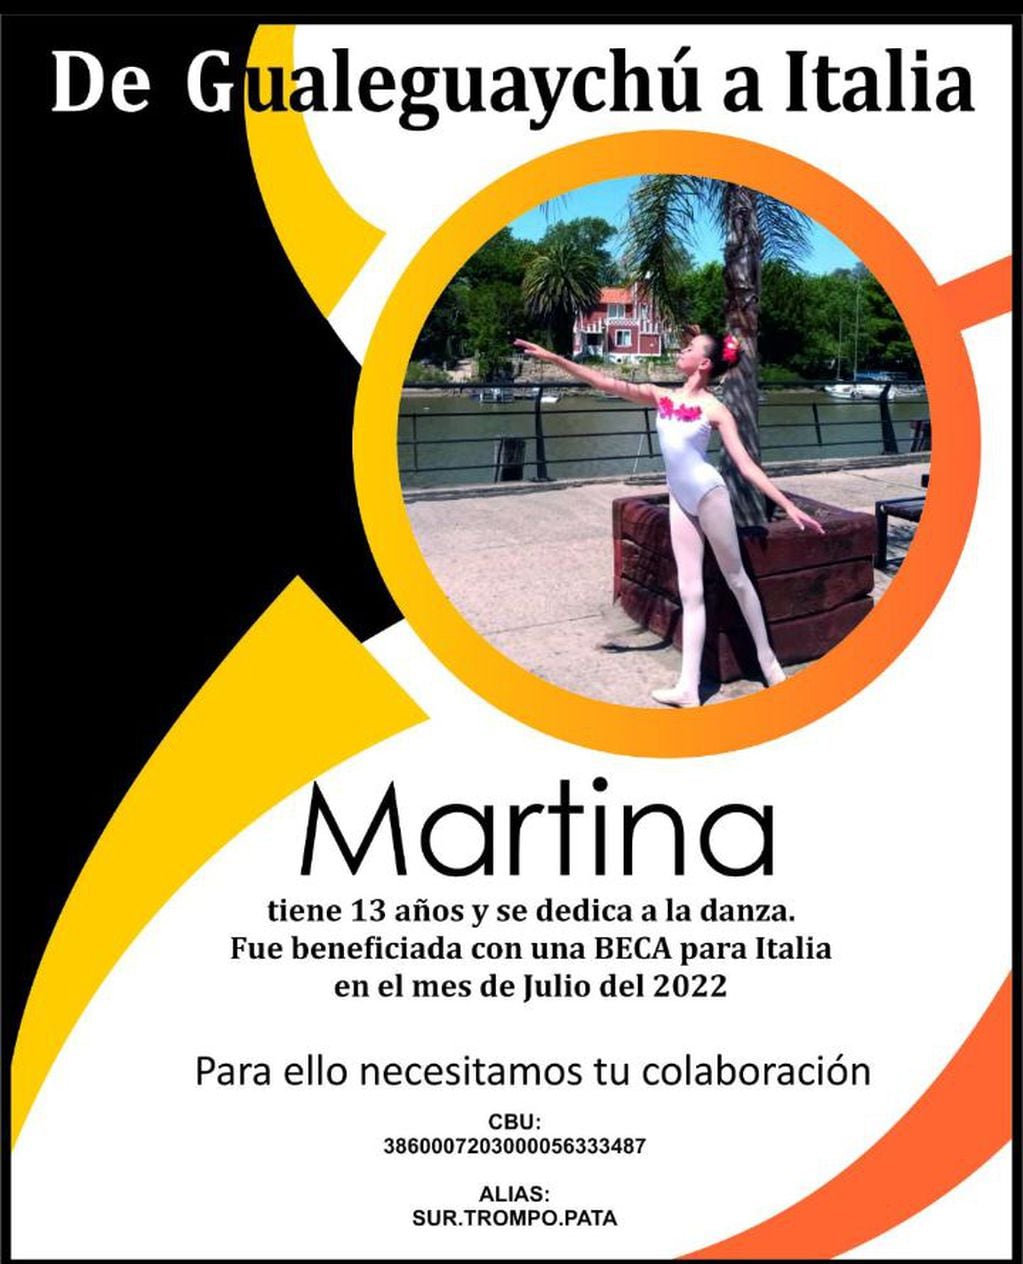 Martina Albornoz - Bailarina de Gualeguaychú